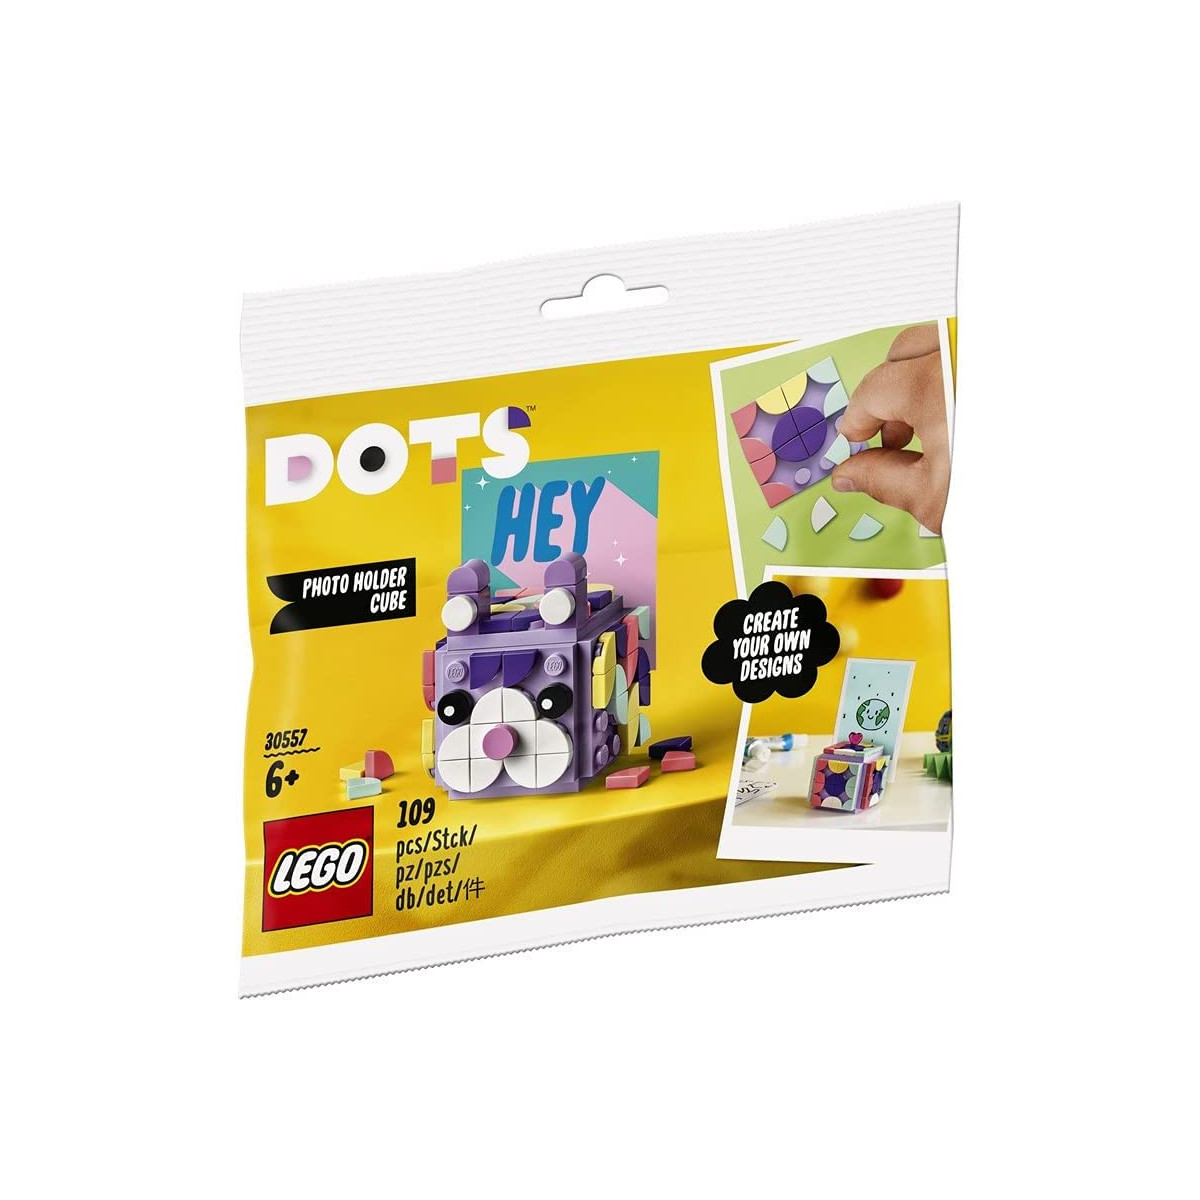 Lego Dots 30557 - photo holder cube polybag